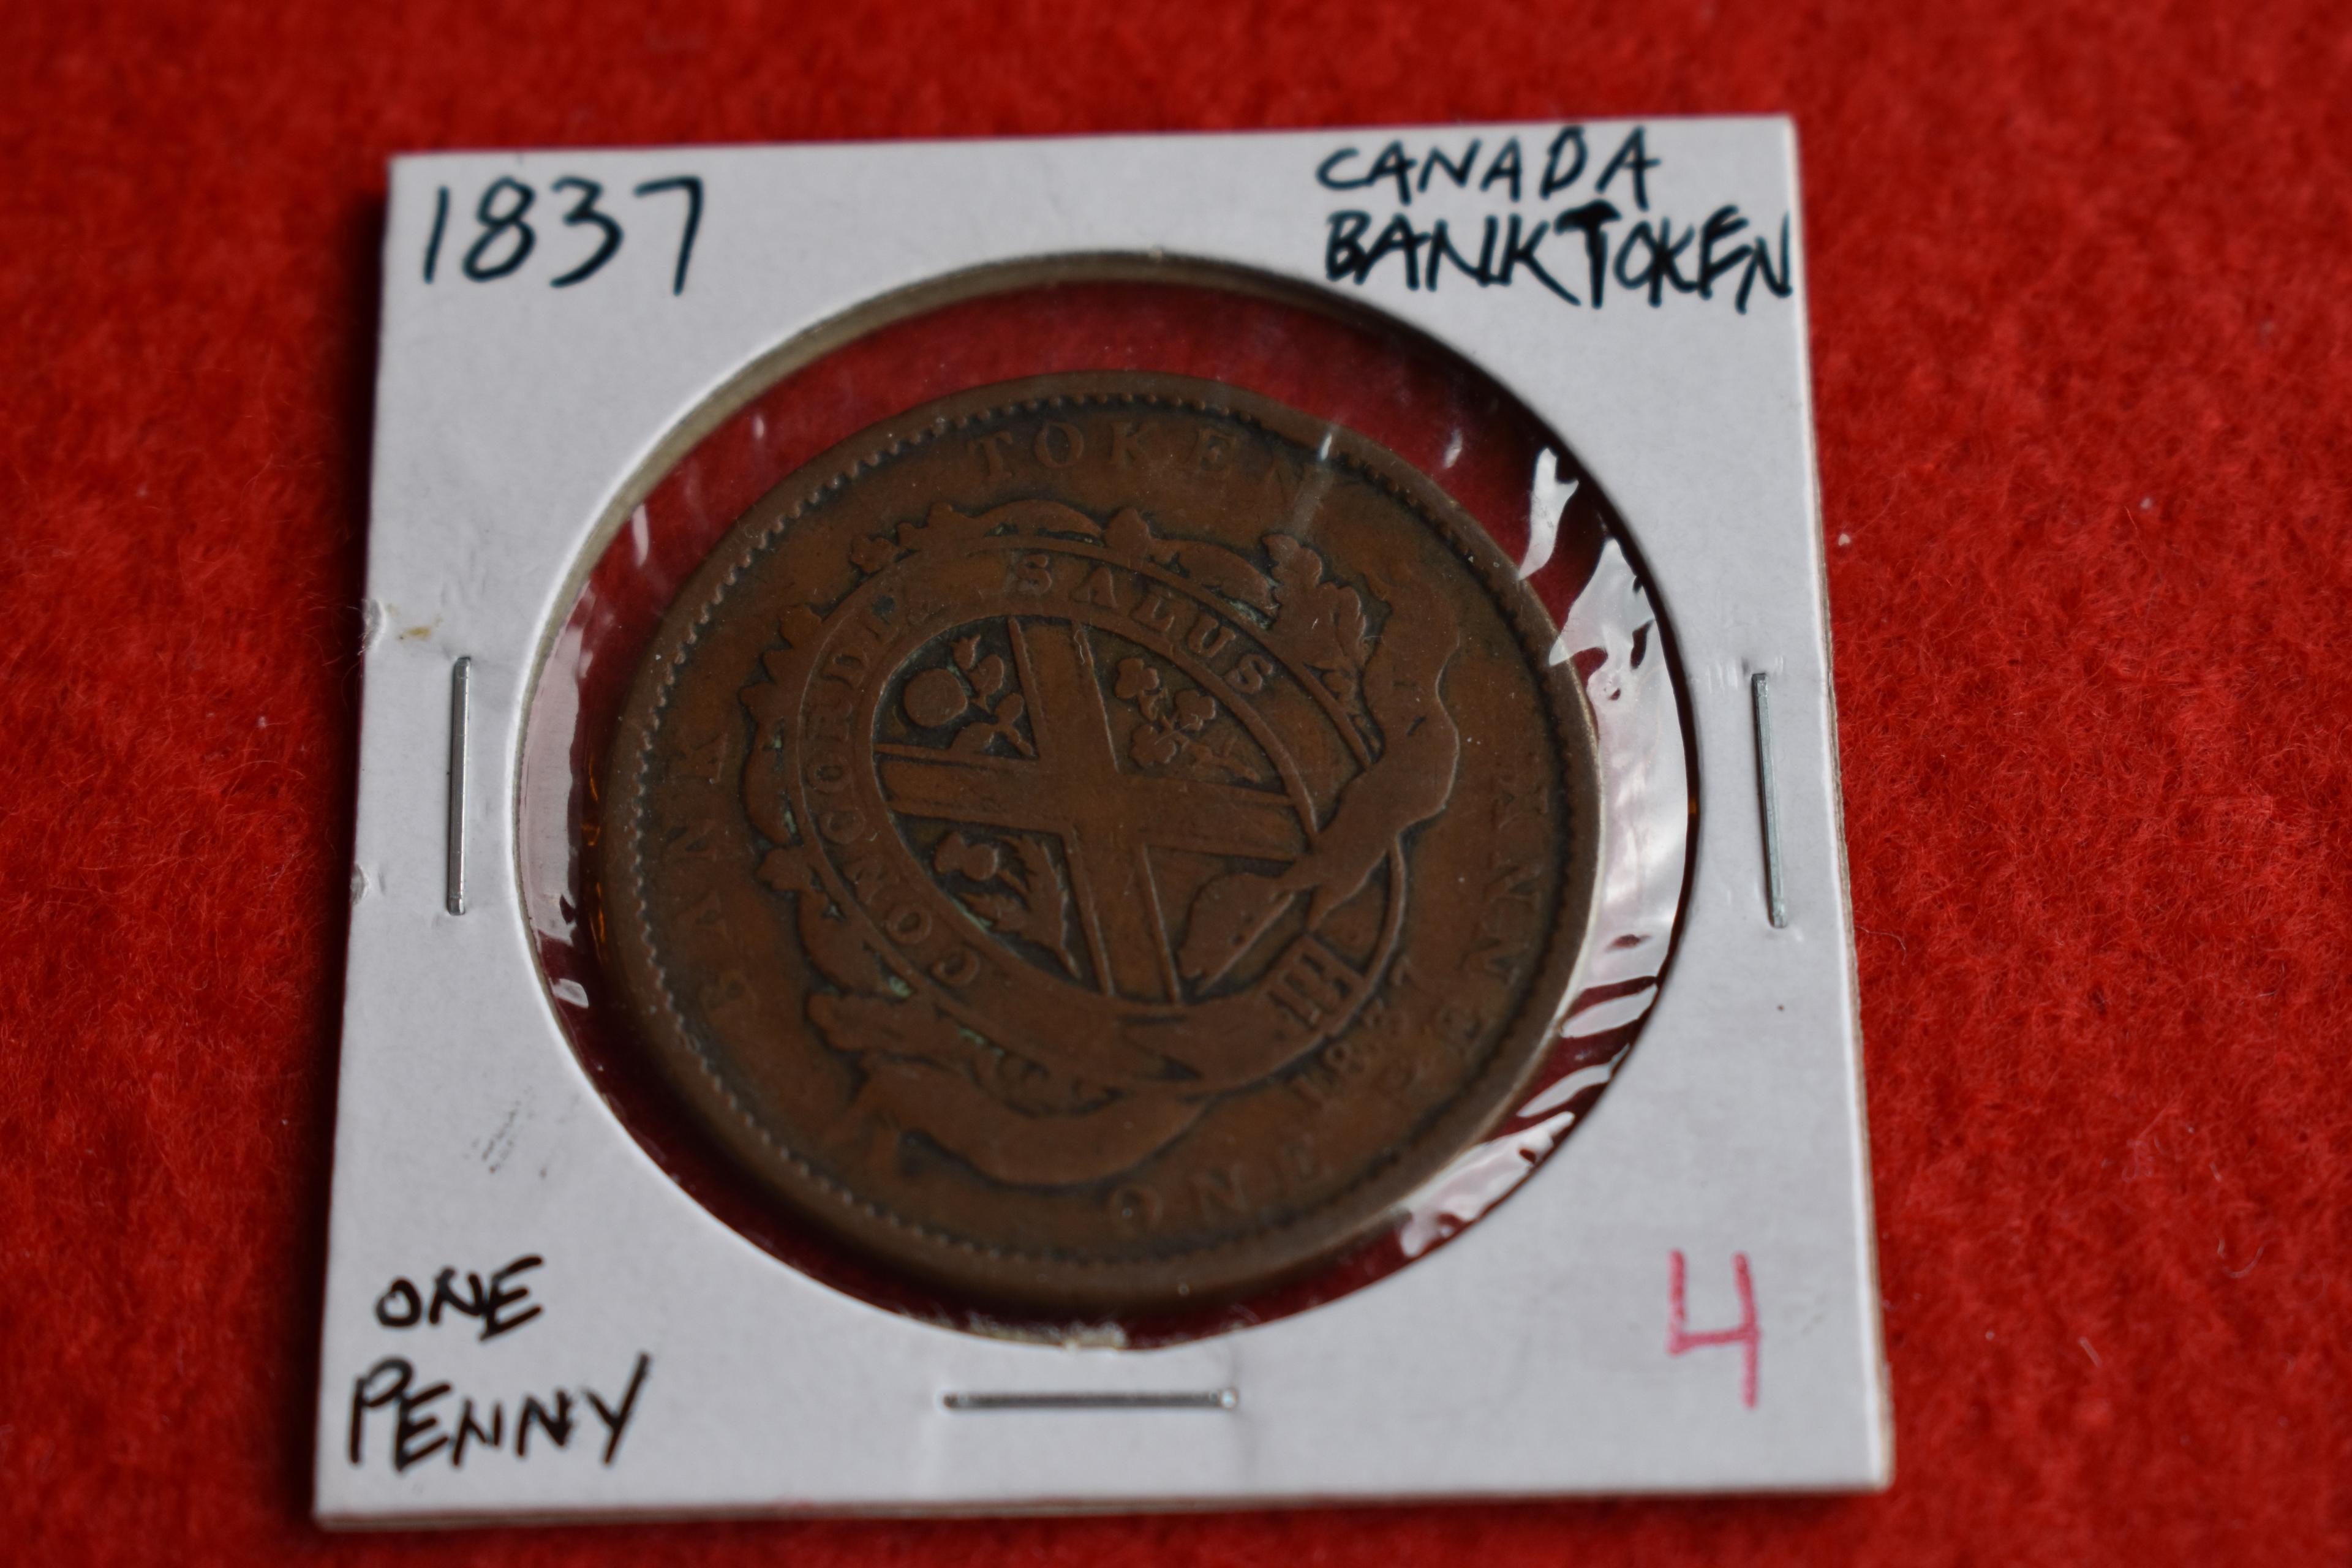 1837 Canada Bank Token One Penny